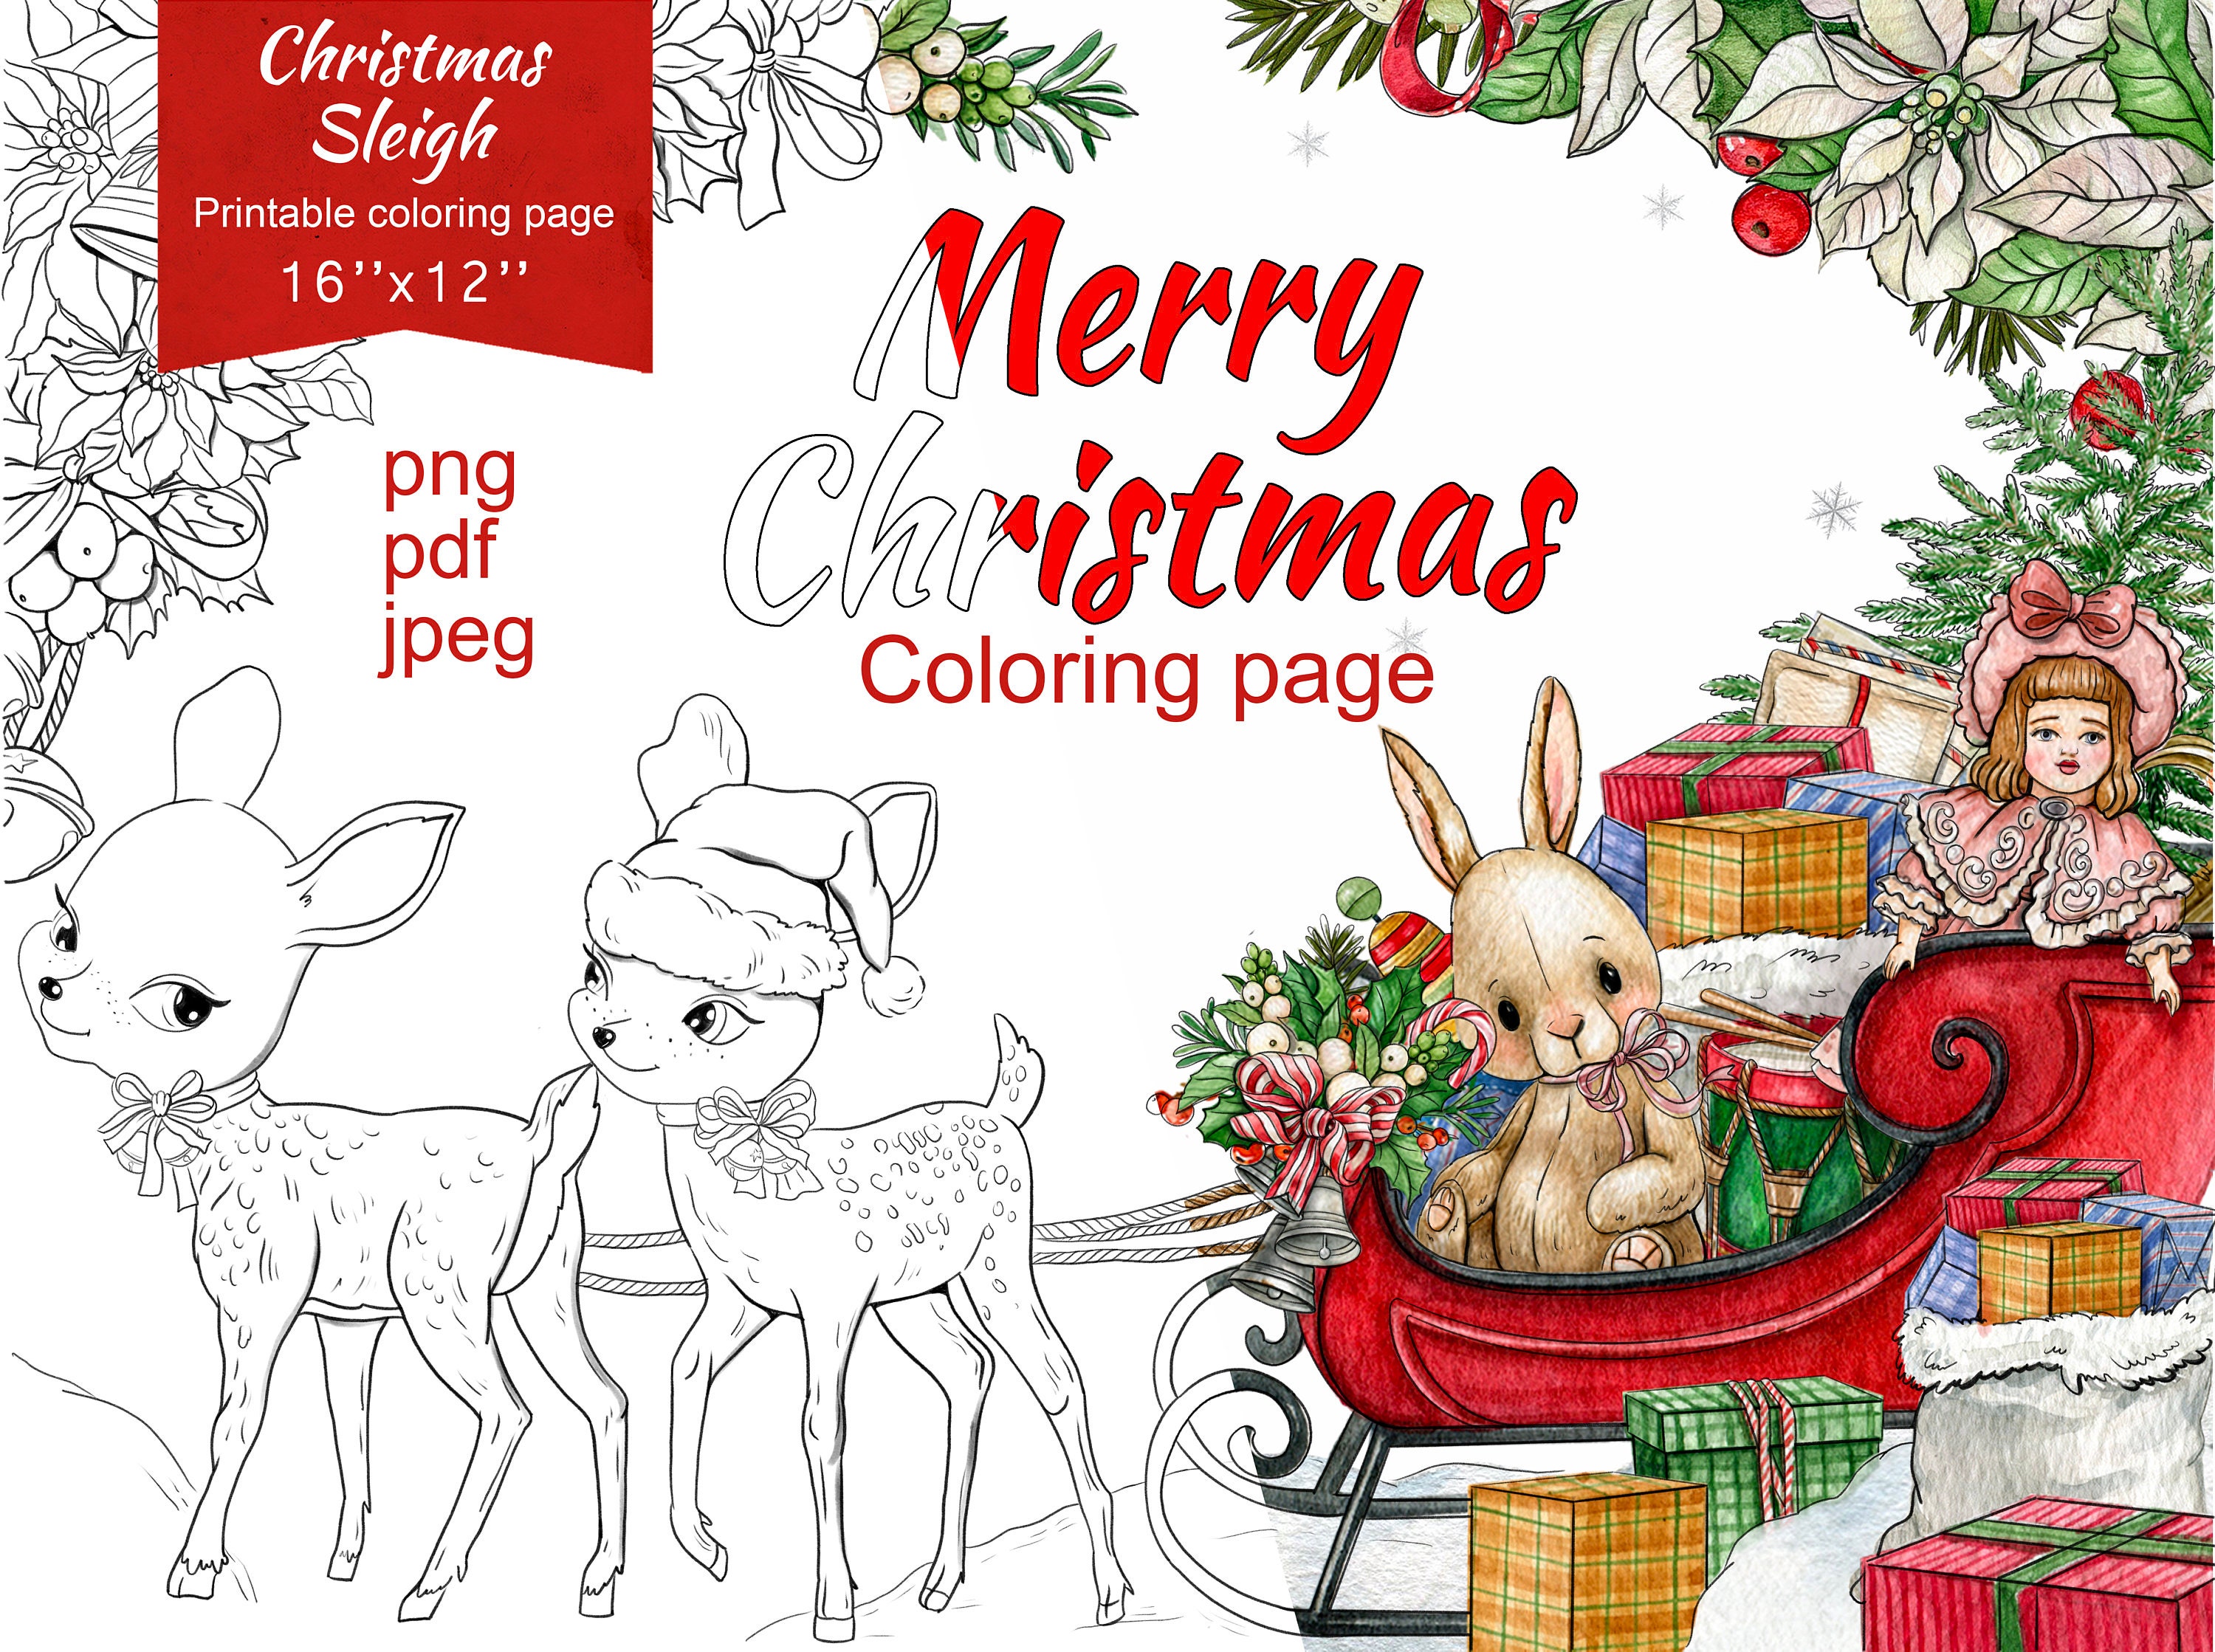 Christmas adult coloring page pdfchristmas sleigh coloring page for kidsdigital printable holiday coloring sheetsinstant download jpeg